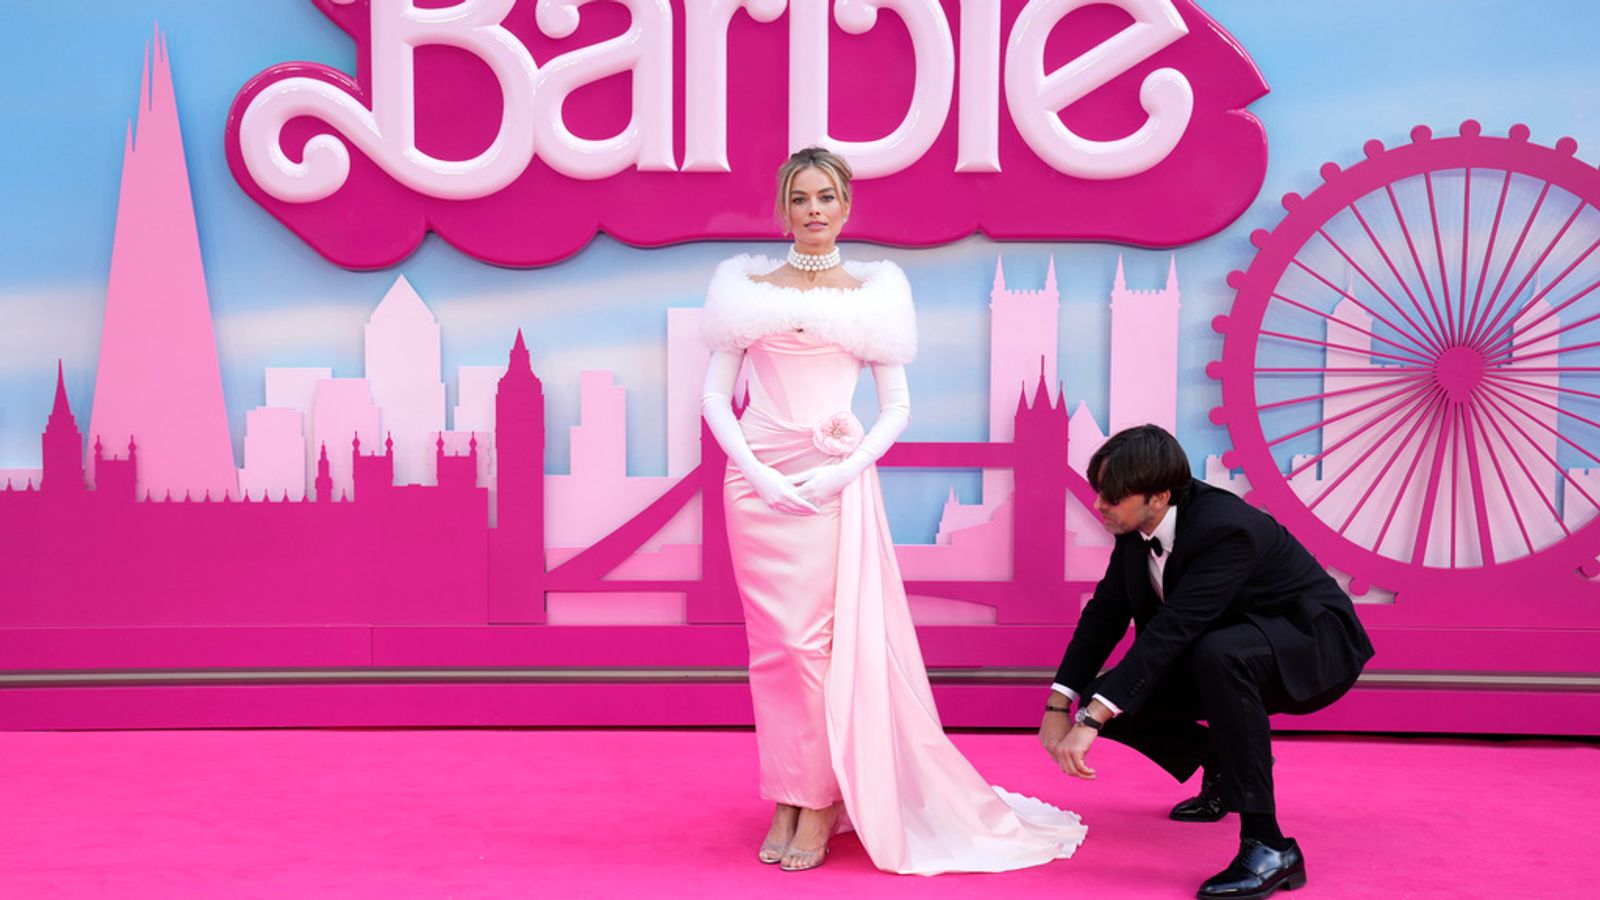 Shop the pink Birkenstocks Margot Robbie wears in 'Barbie